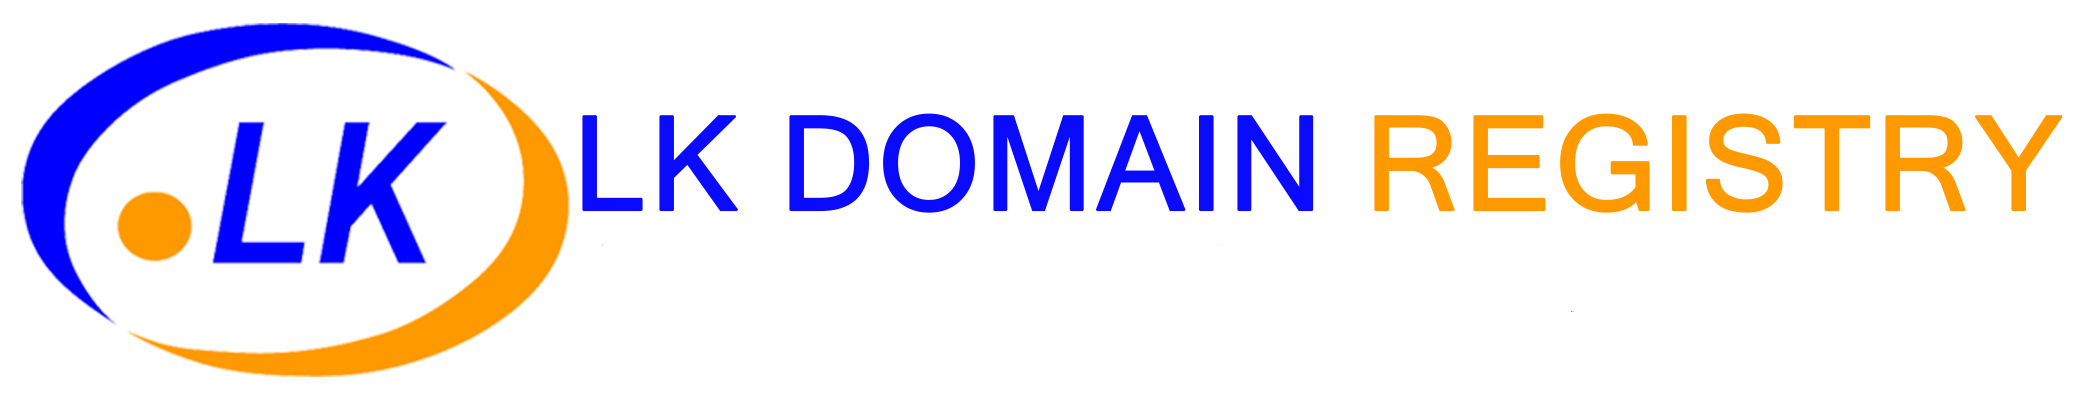 LK Domain Registry